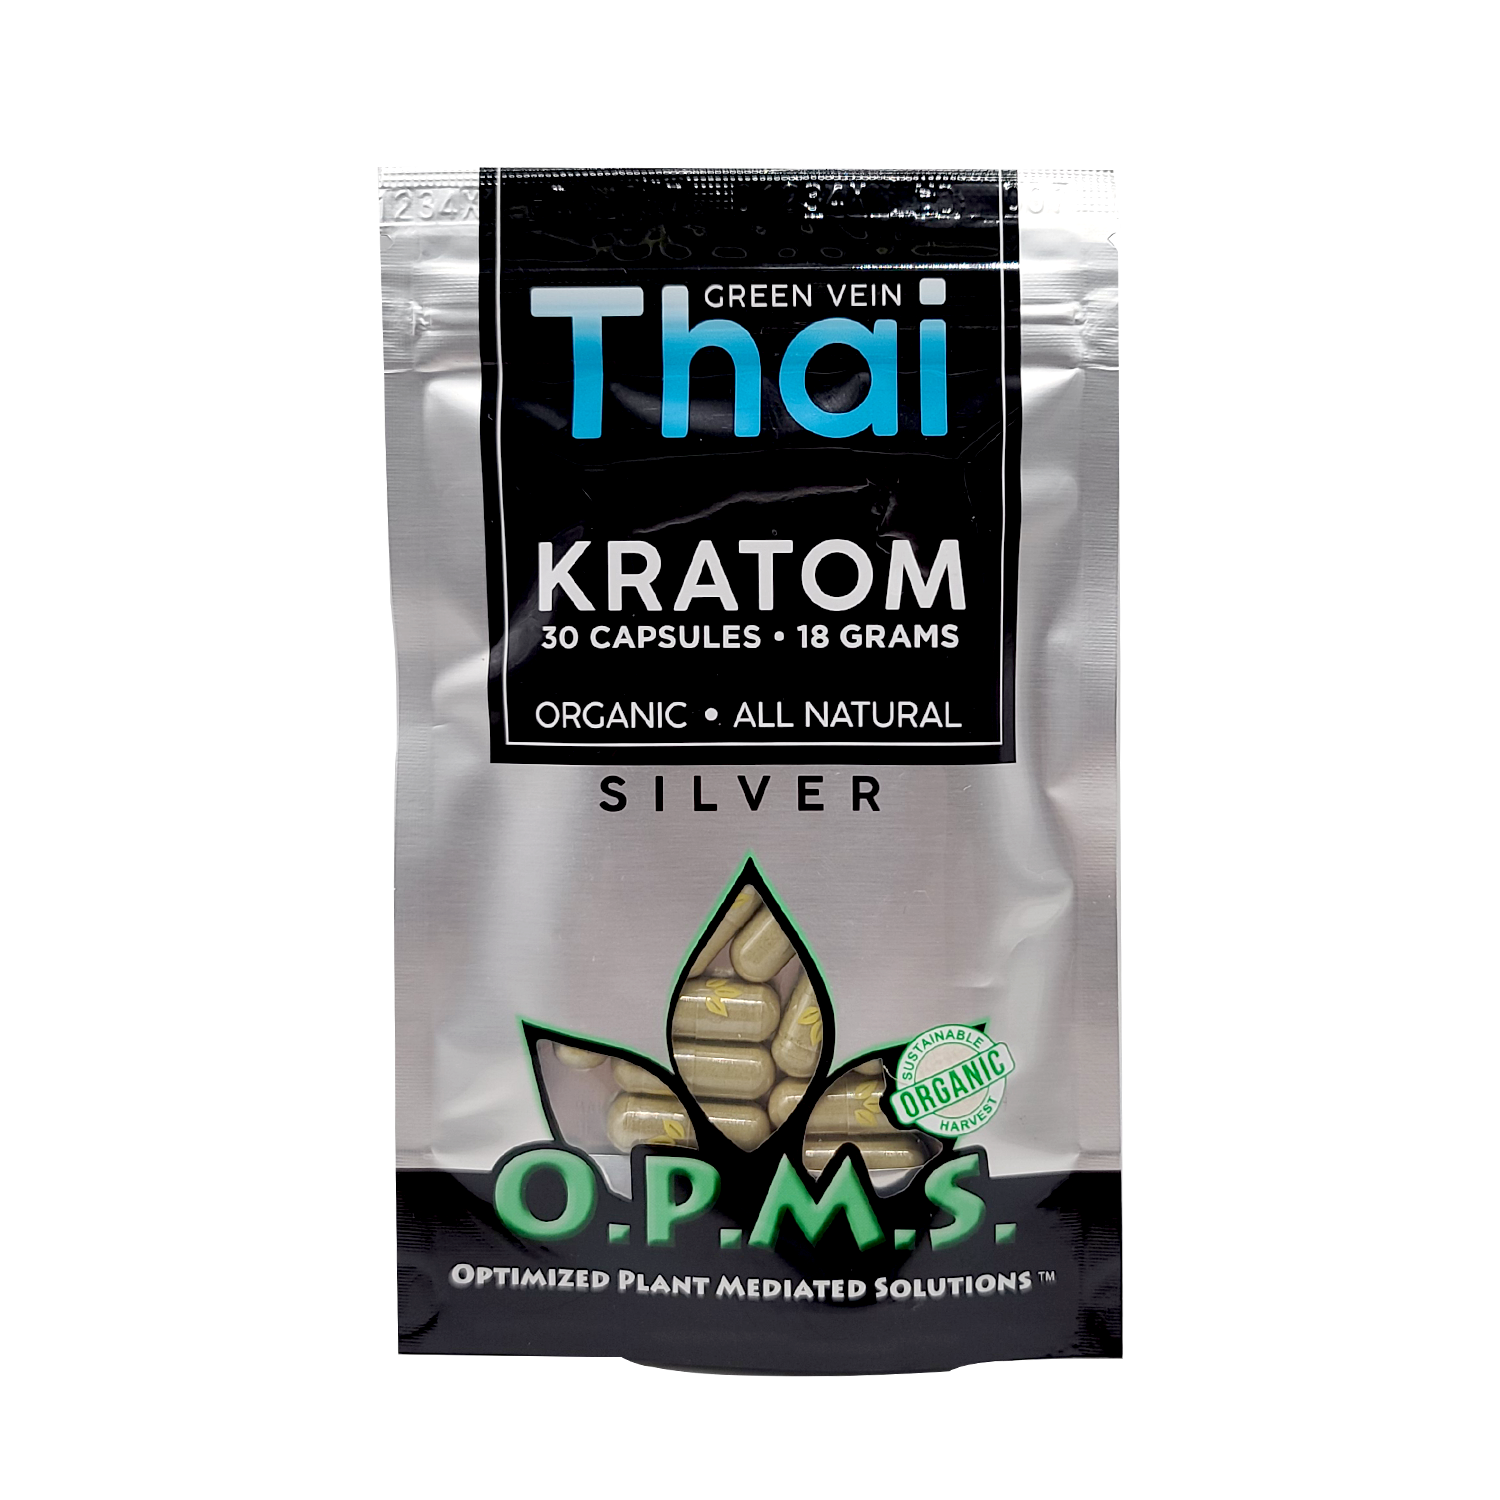 O.P.M.S. Silver Capsules Kratom OPMS Green Vein Thai 16 Count 